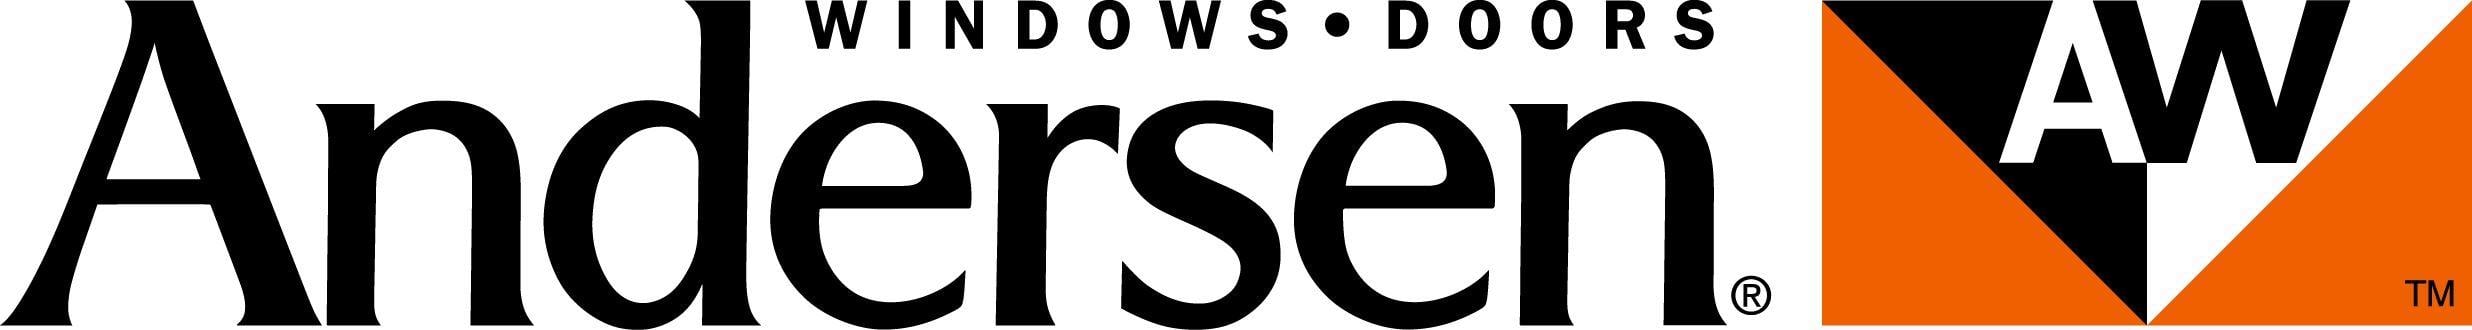 Anderson Logo - Anderson Windows Doors Logo. Crown Roofing & Contracting